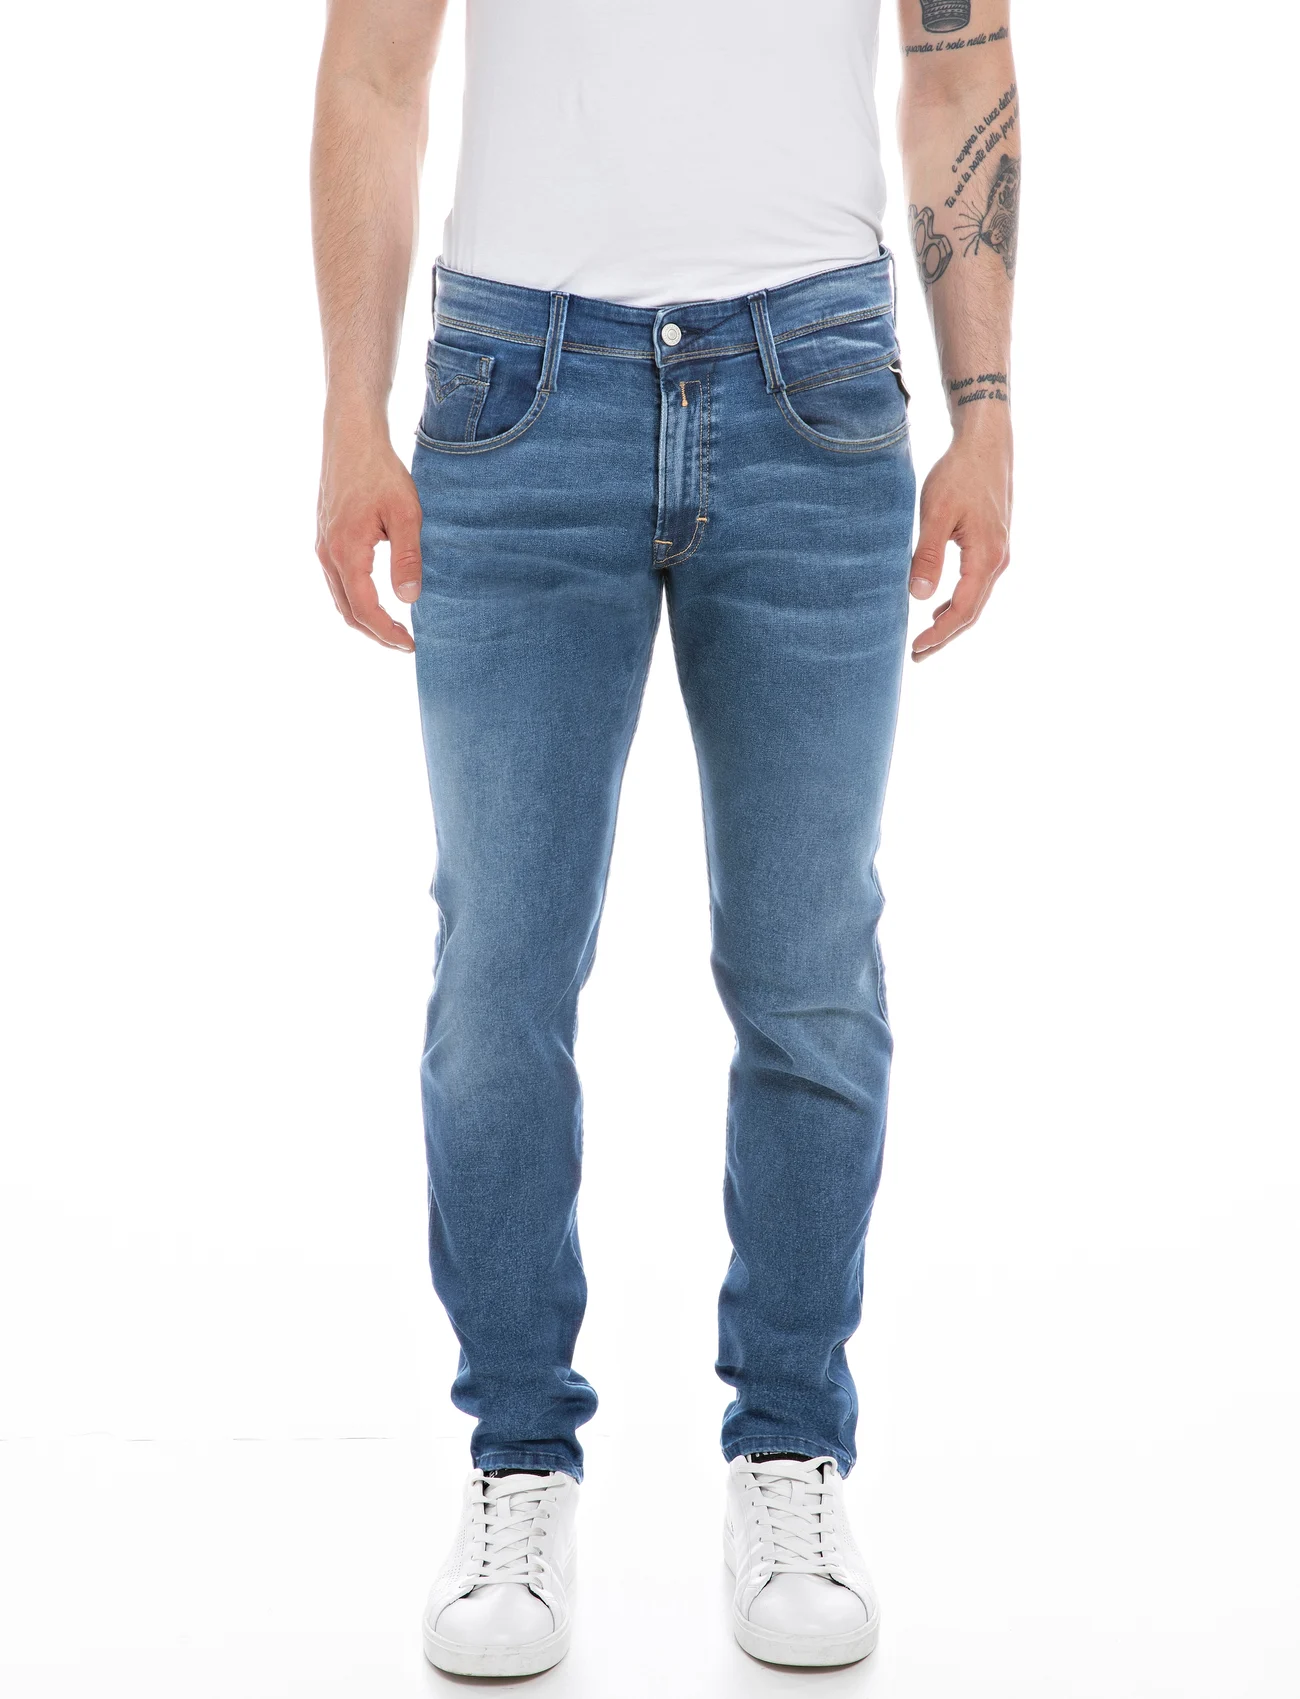 Replay - ANBASS Trousers SLIM HYPERFLEX ORIGINAL - slim jeans - blue - 0